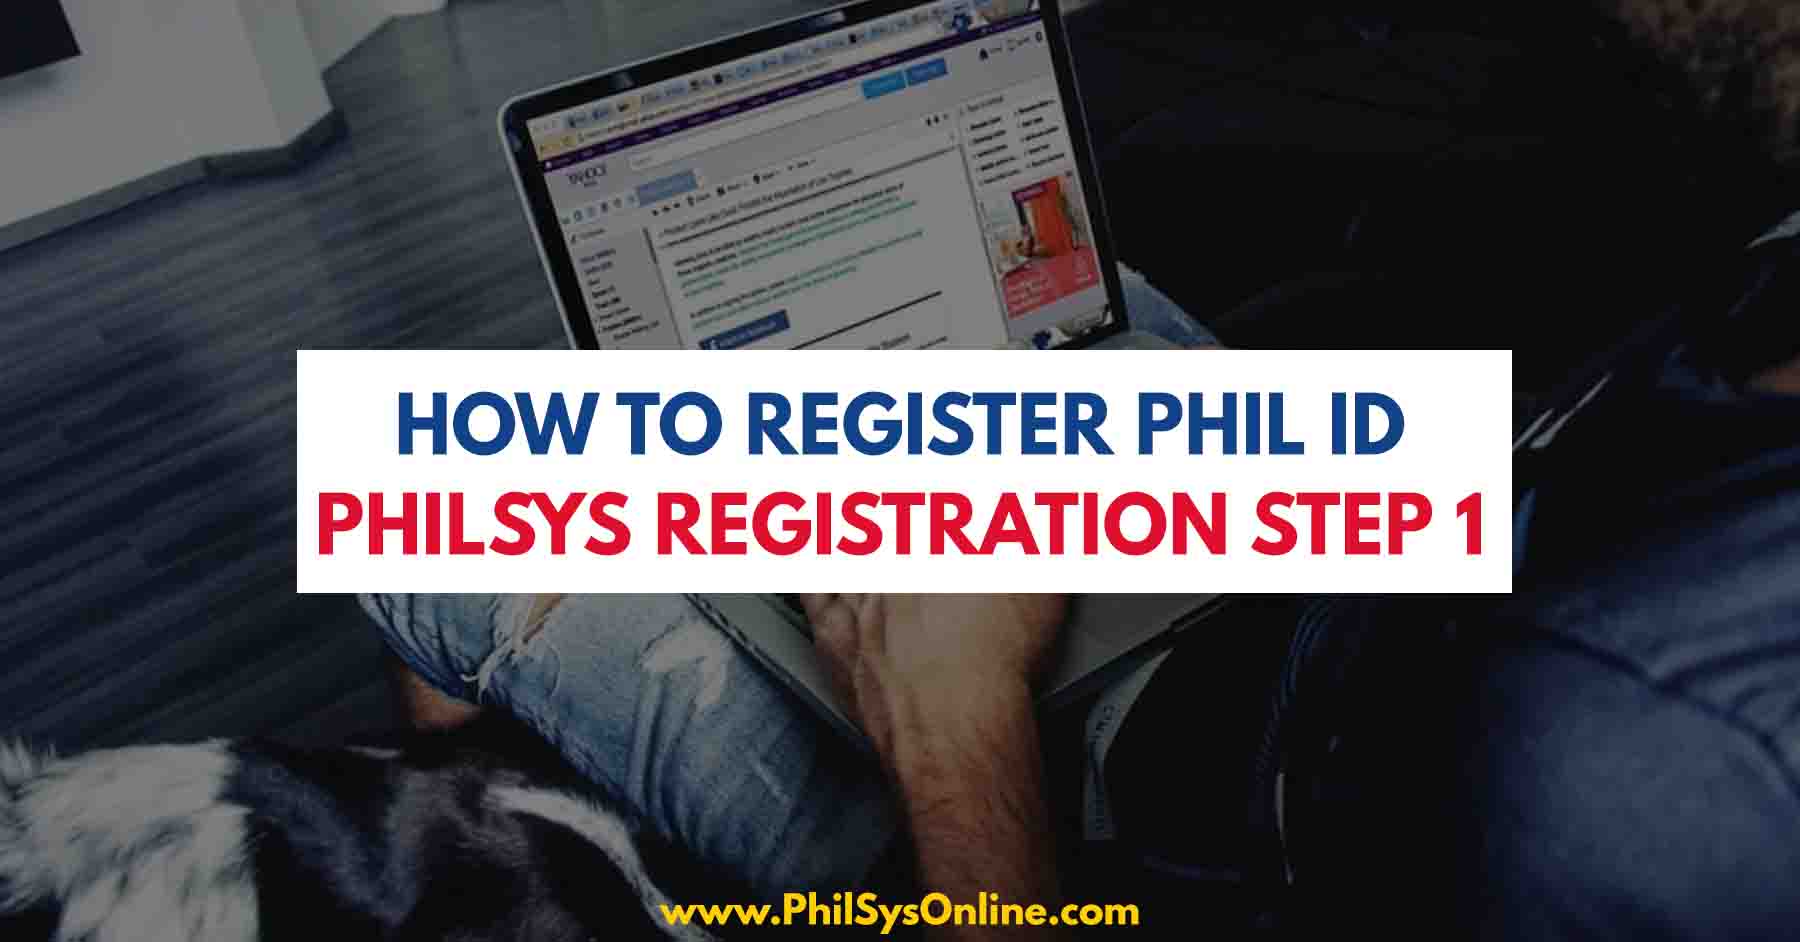 philsys registration step 1 process